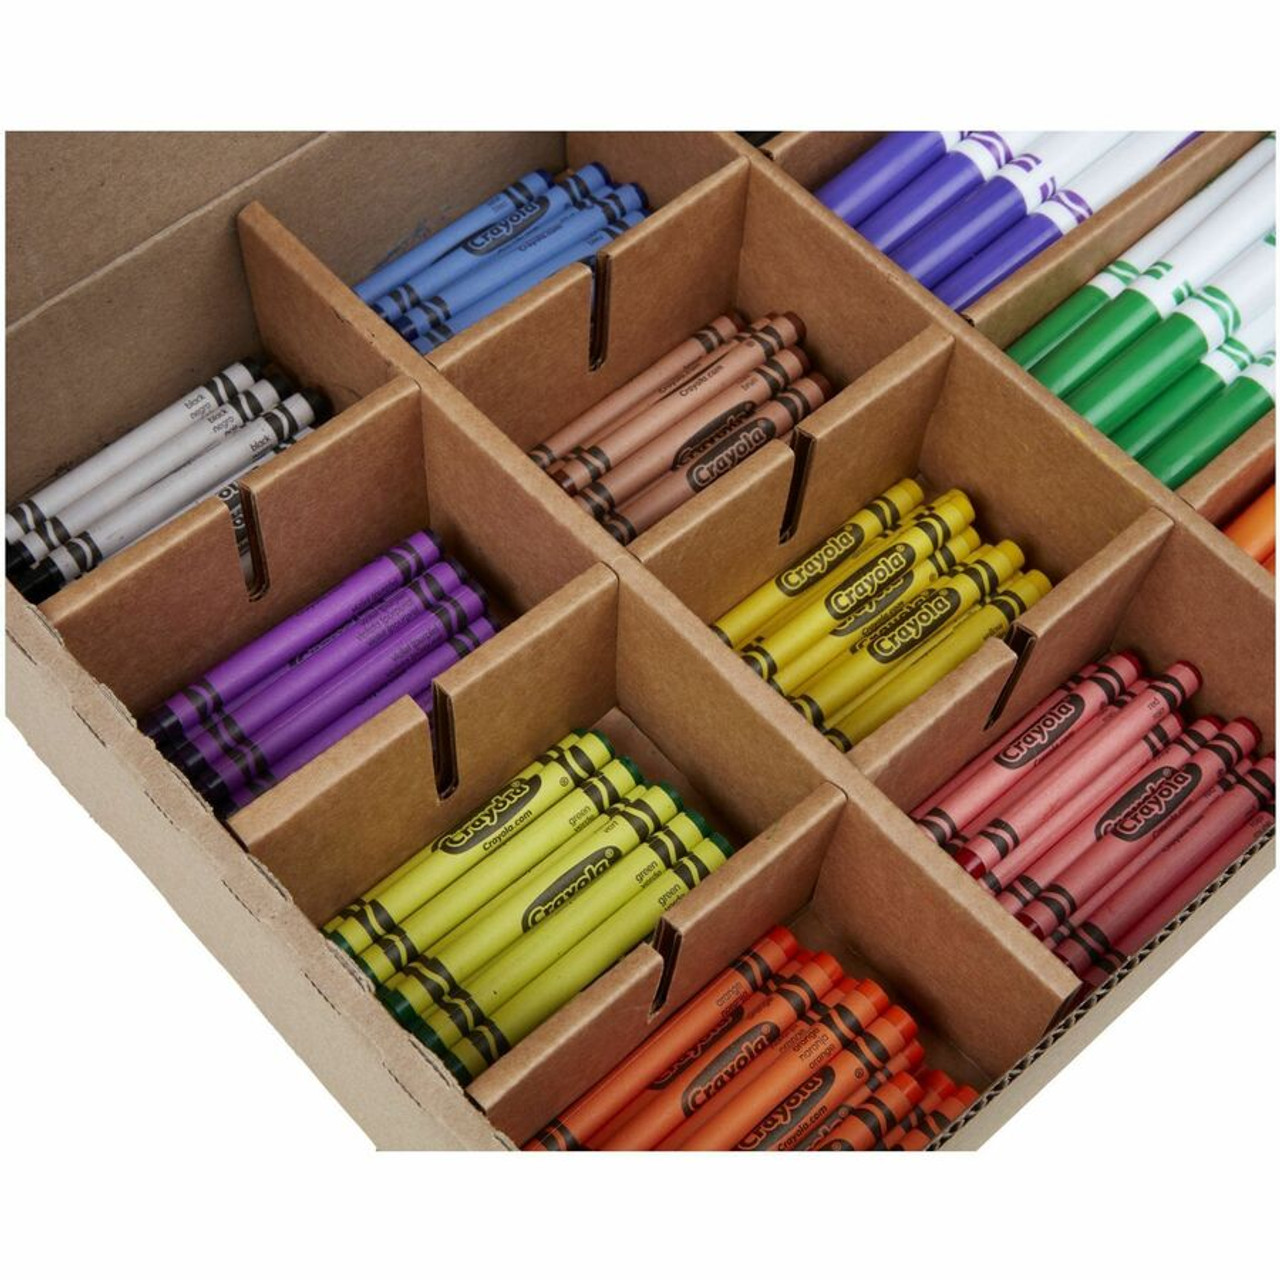 Crayola Crayon/Marker Set (cyo-523349)